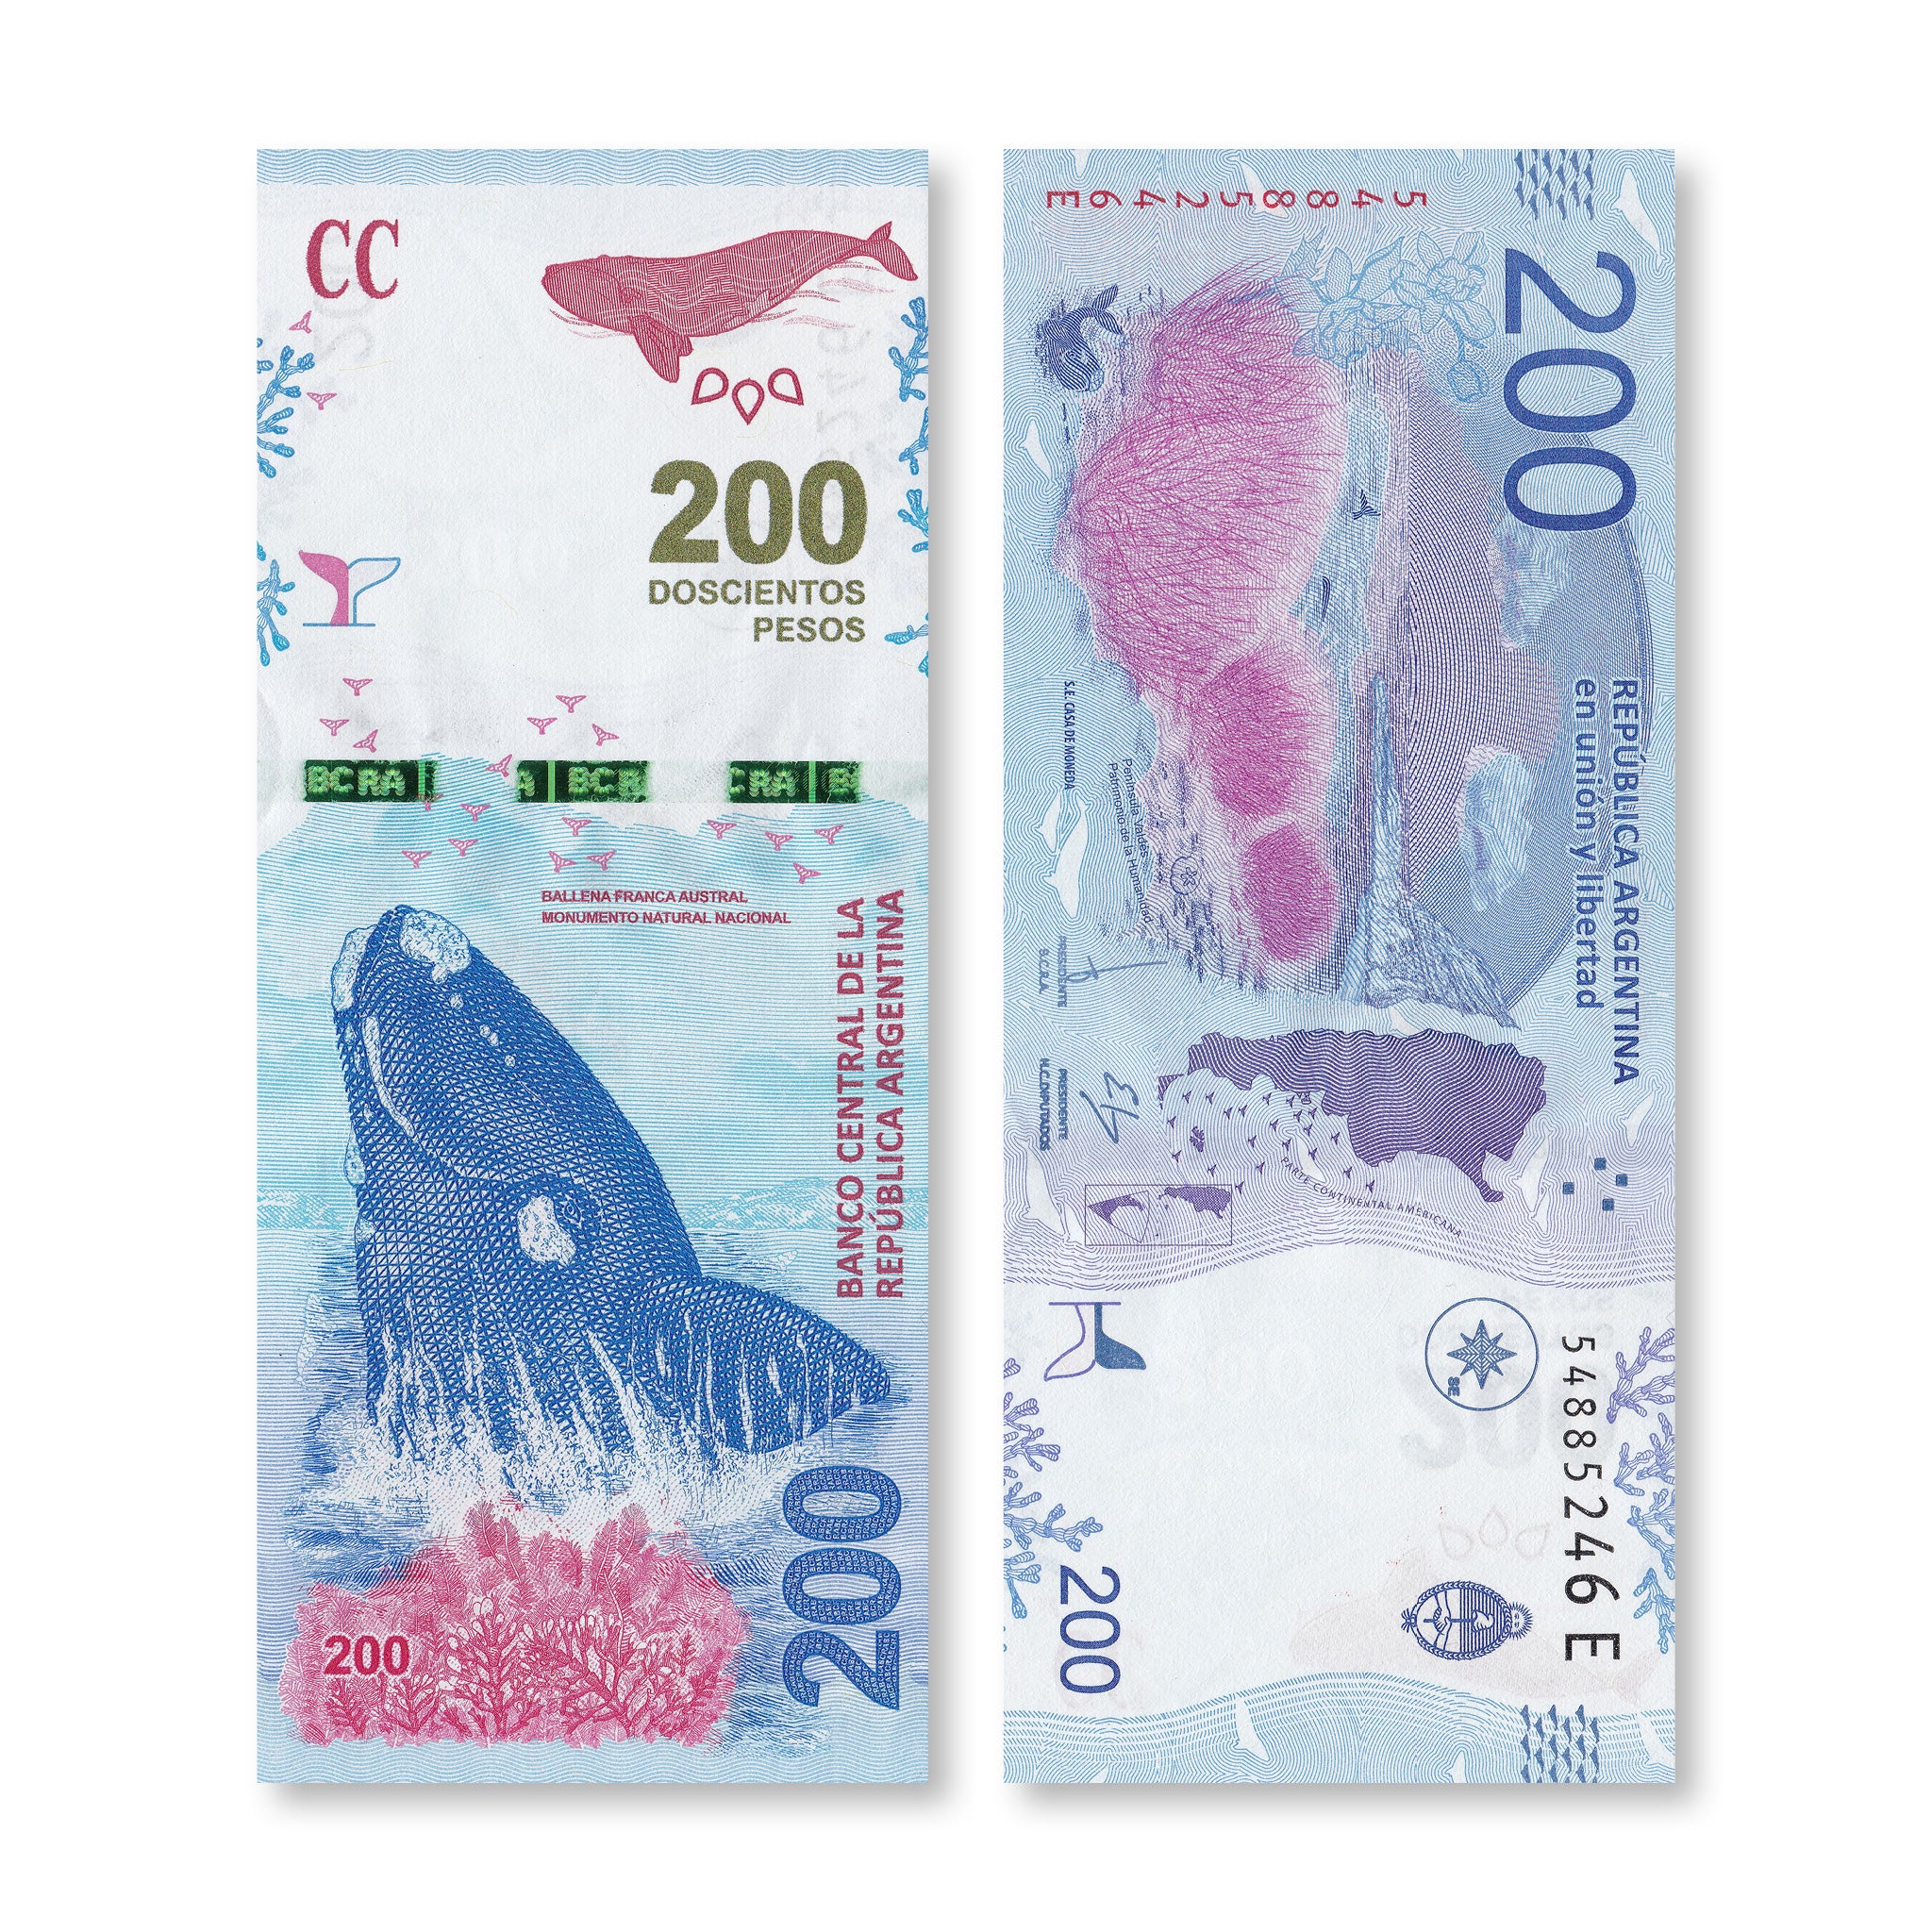 Argentina 200 Pesos, 2016, B420a, P364a, UNC - Robert's World Money - World Banknotes